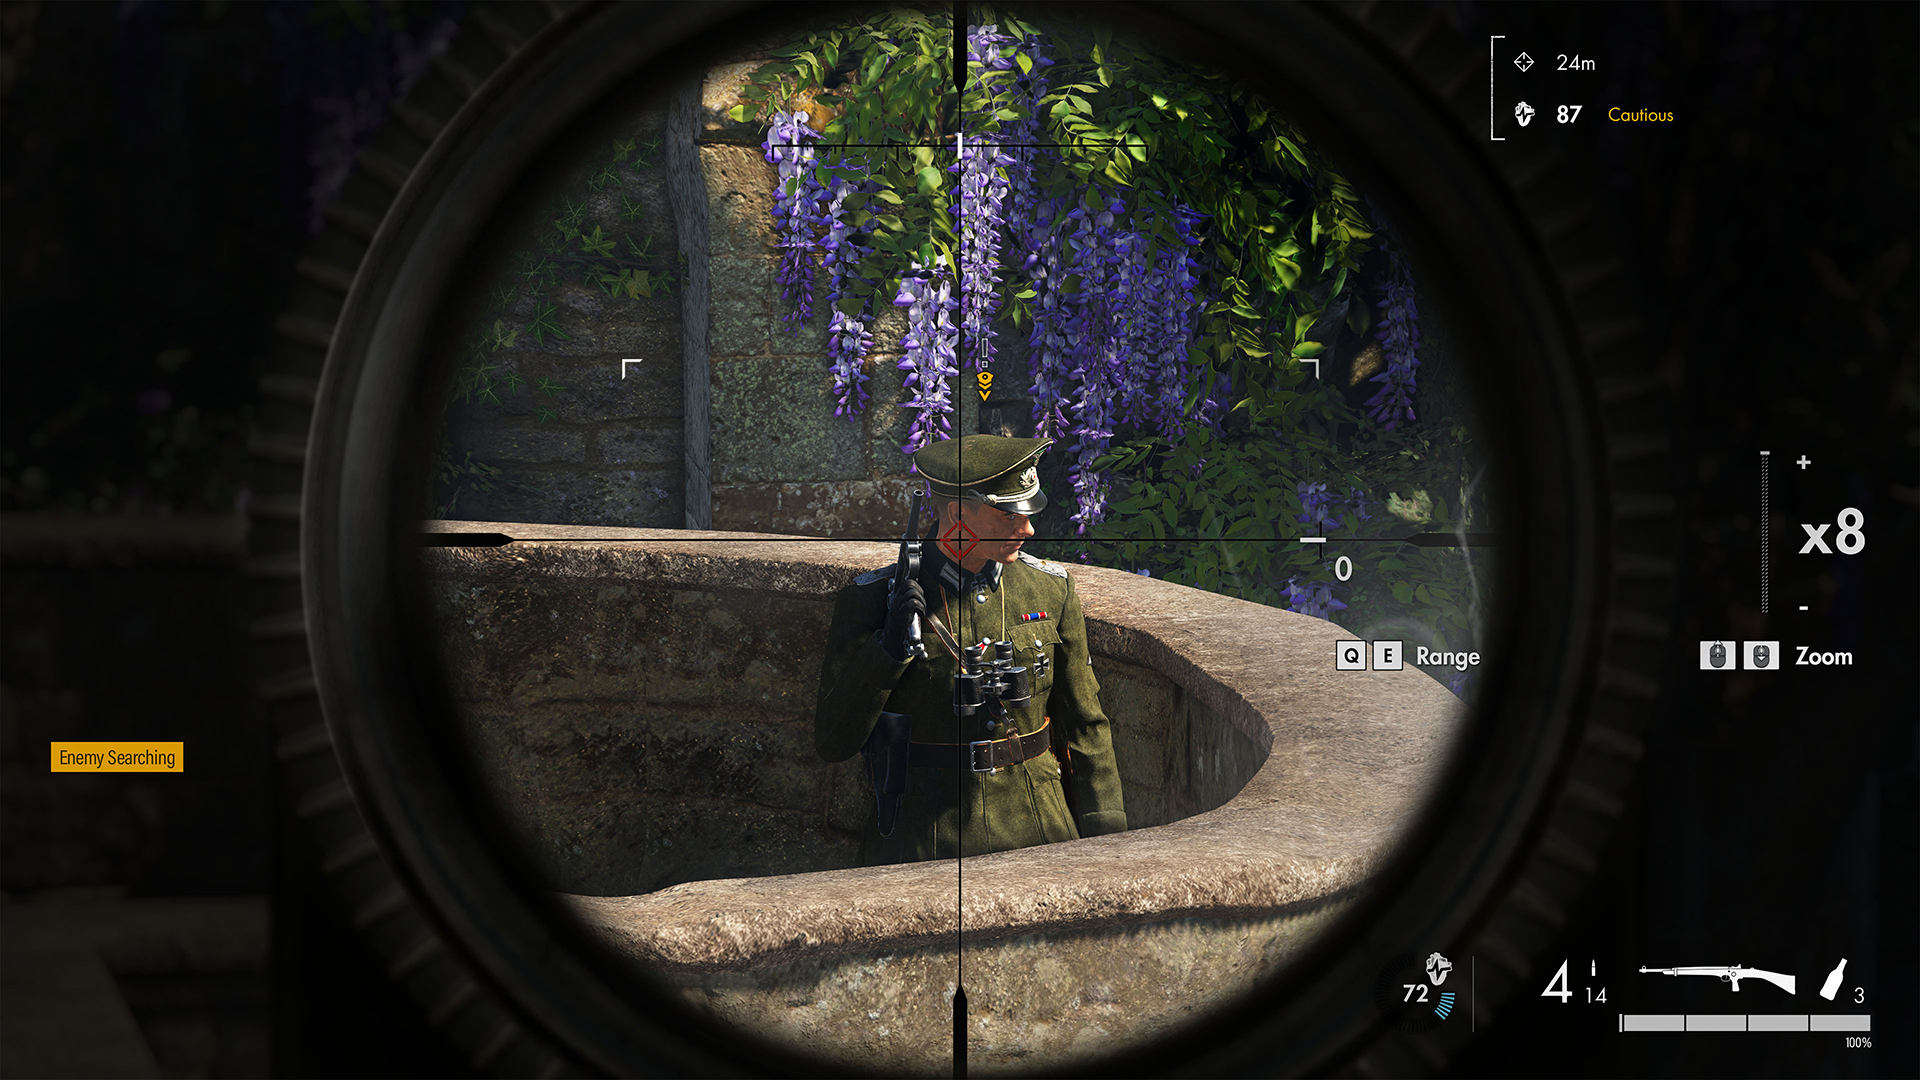 Jogo Sniper Elite 5 France para PS5